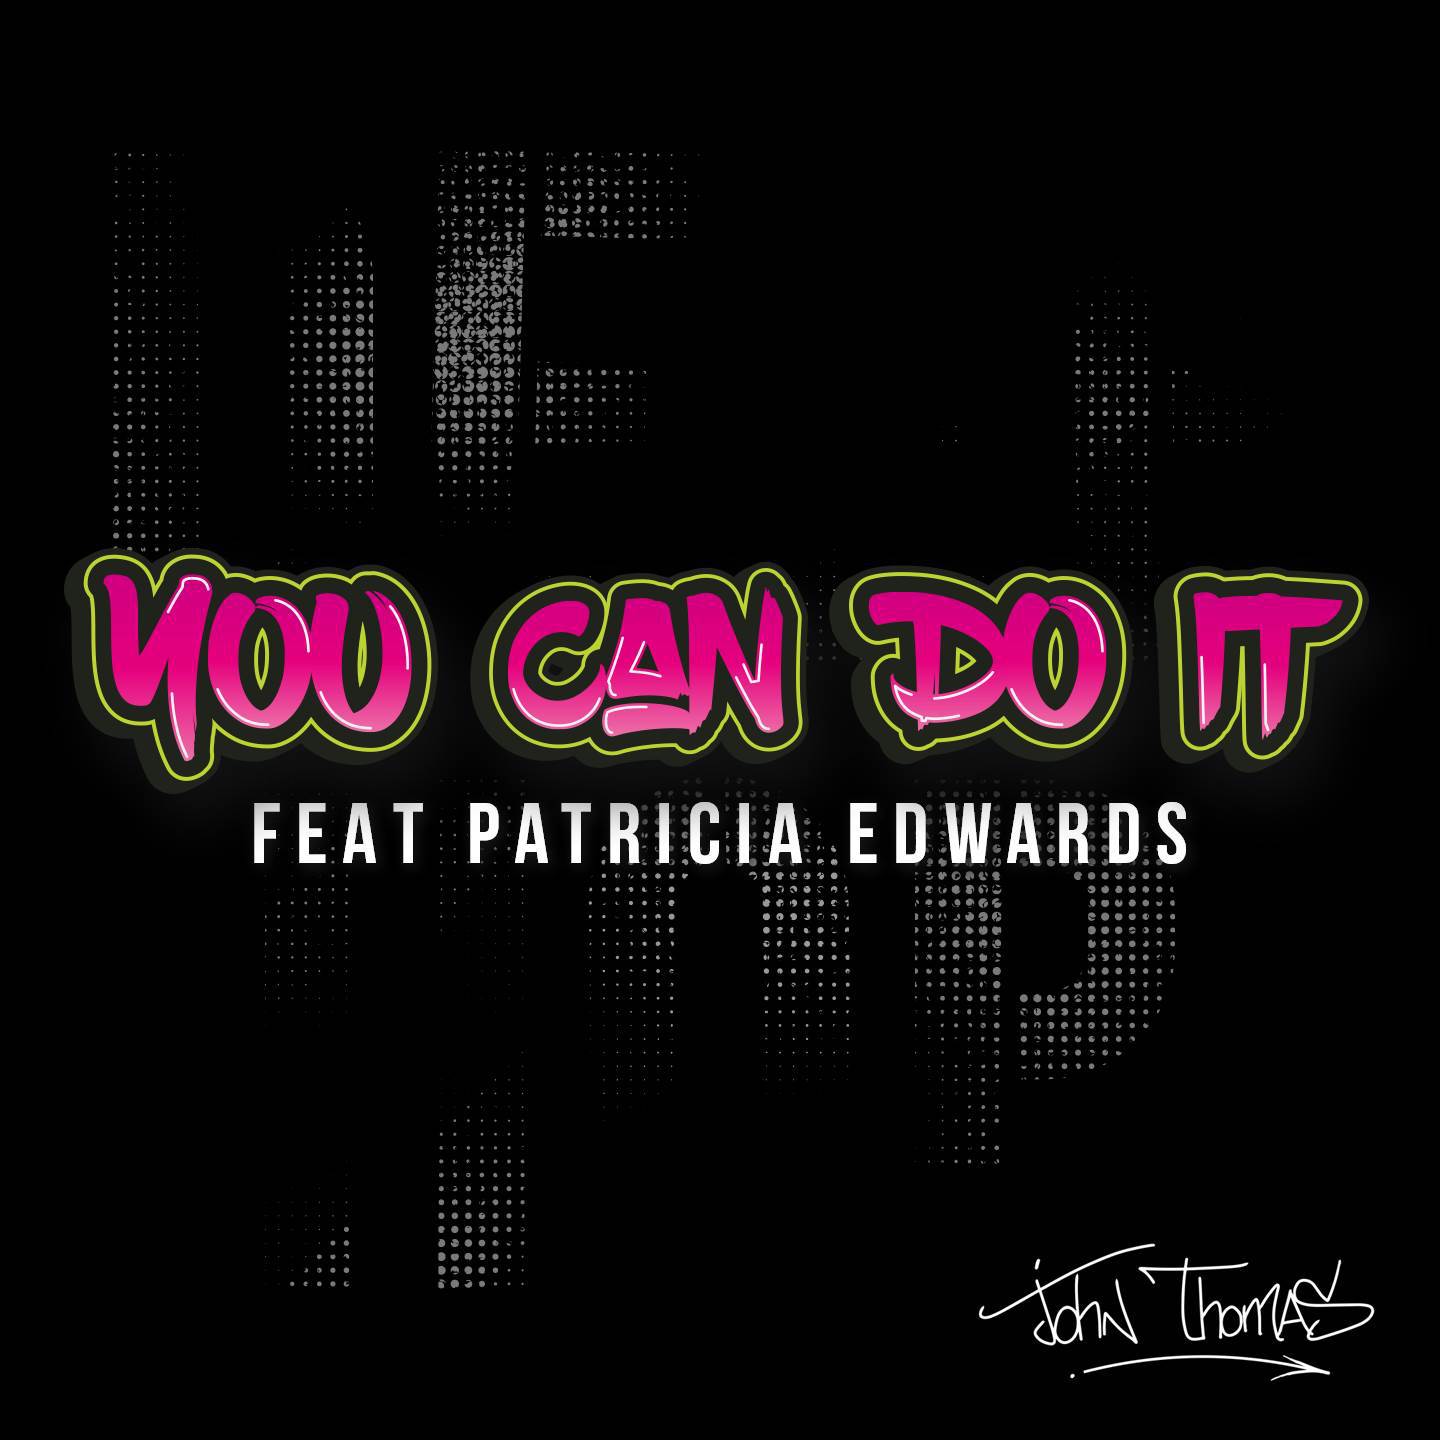 John Thomas - You Can Do It